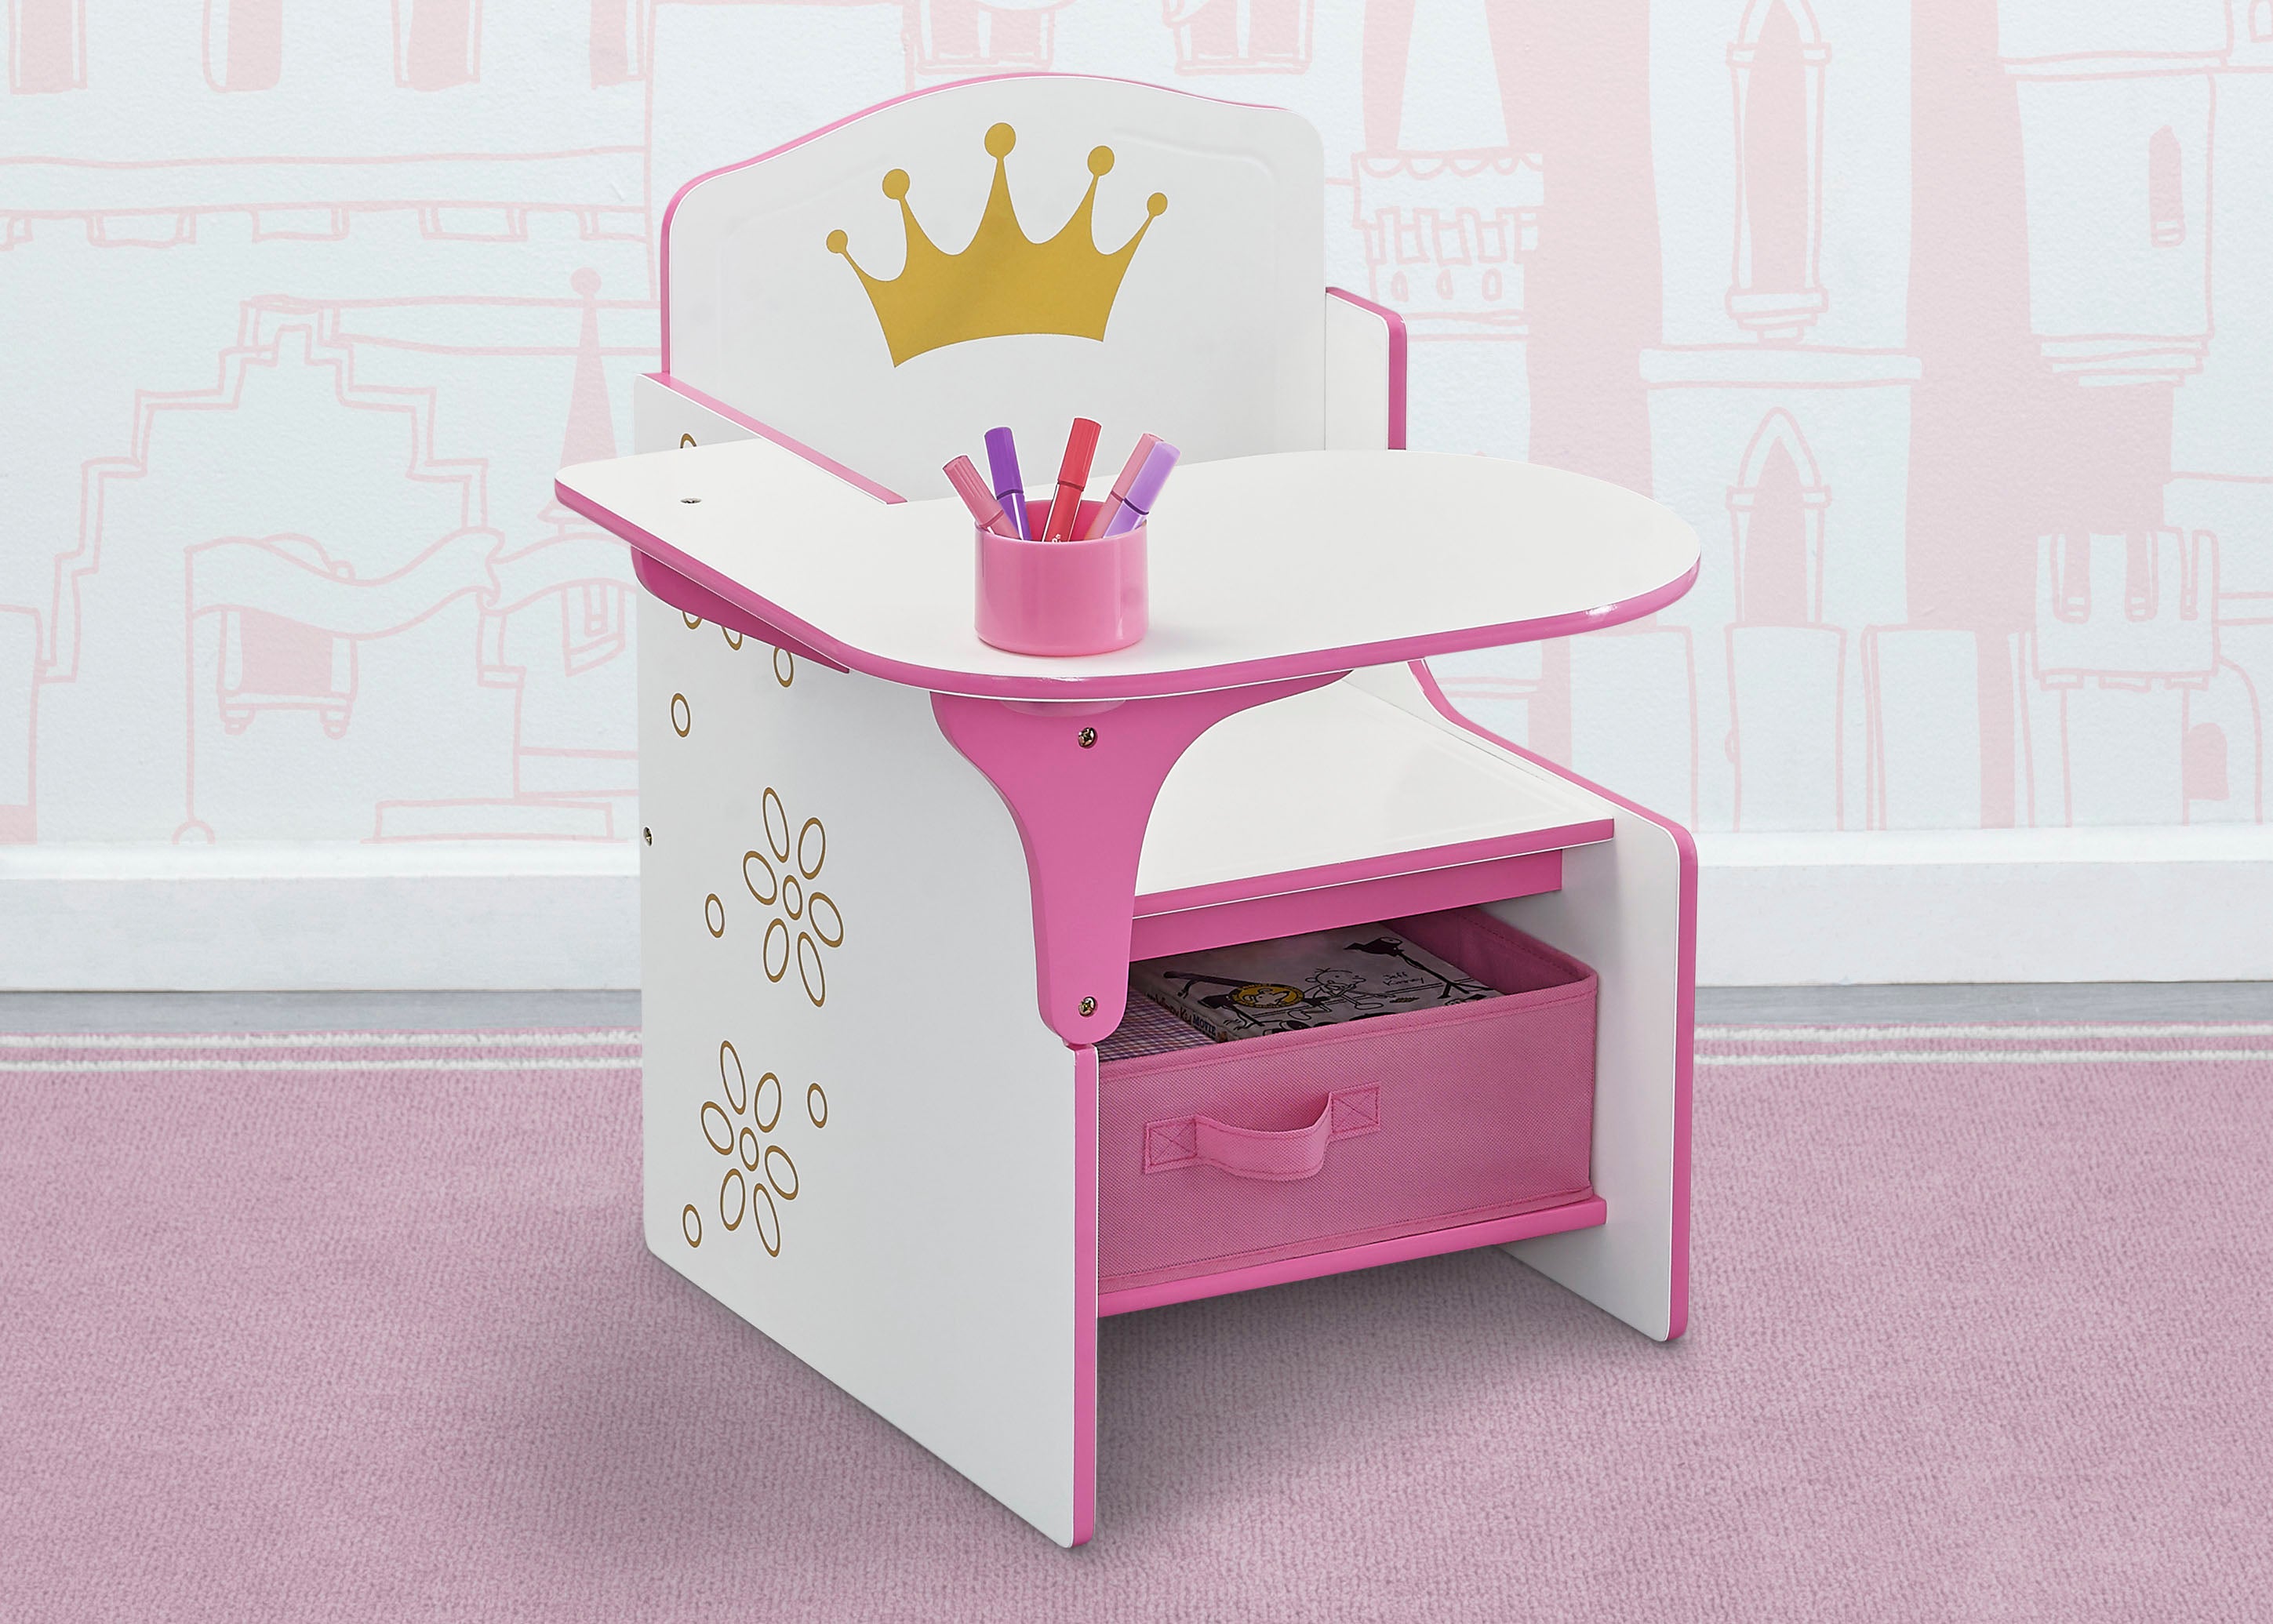 disney princess chair desk